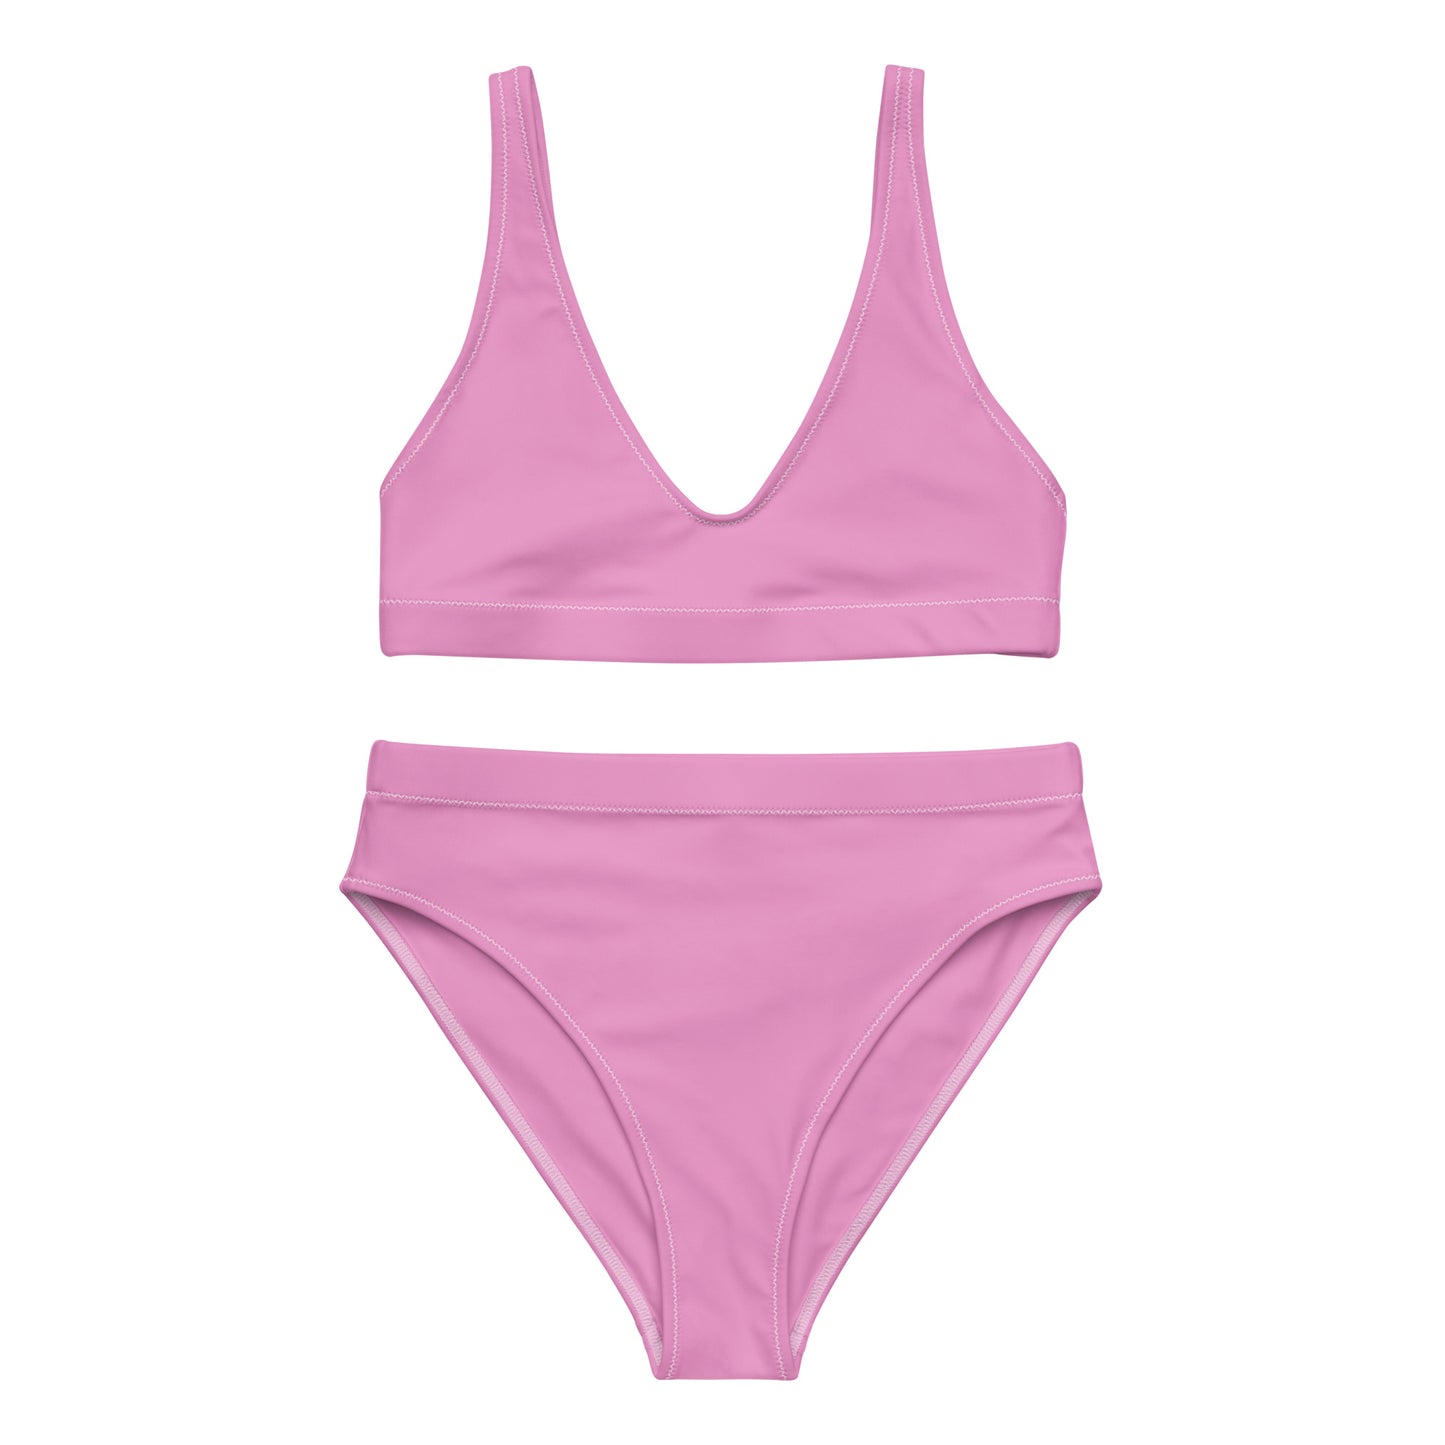 Lavender Rose High-Waisted Bikini